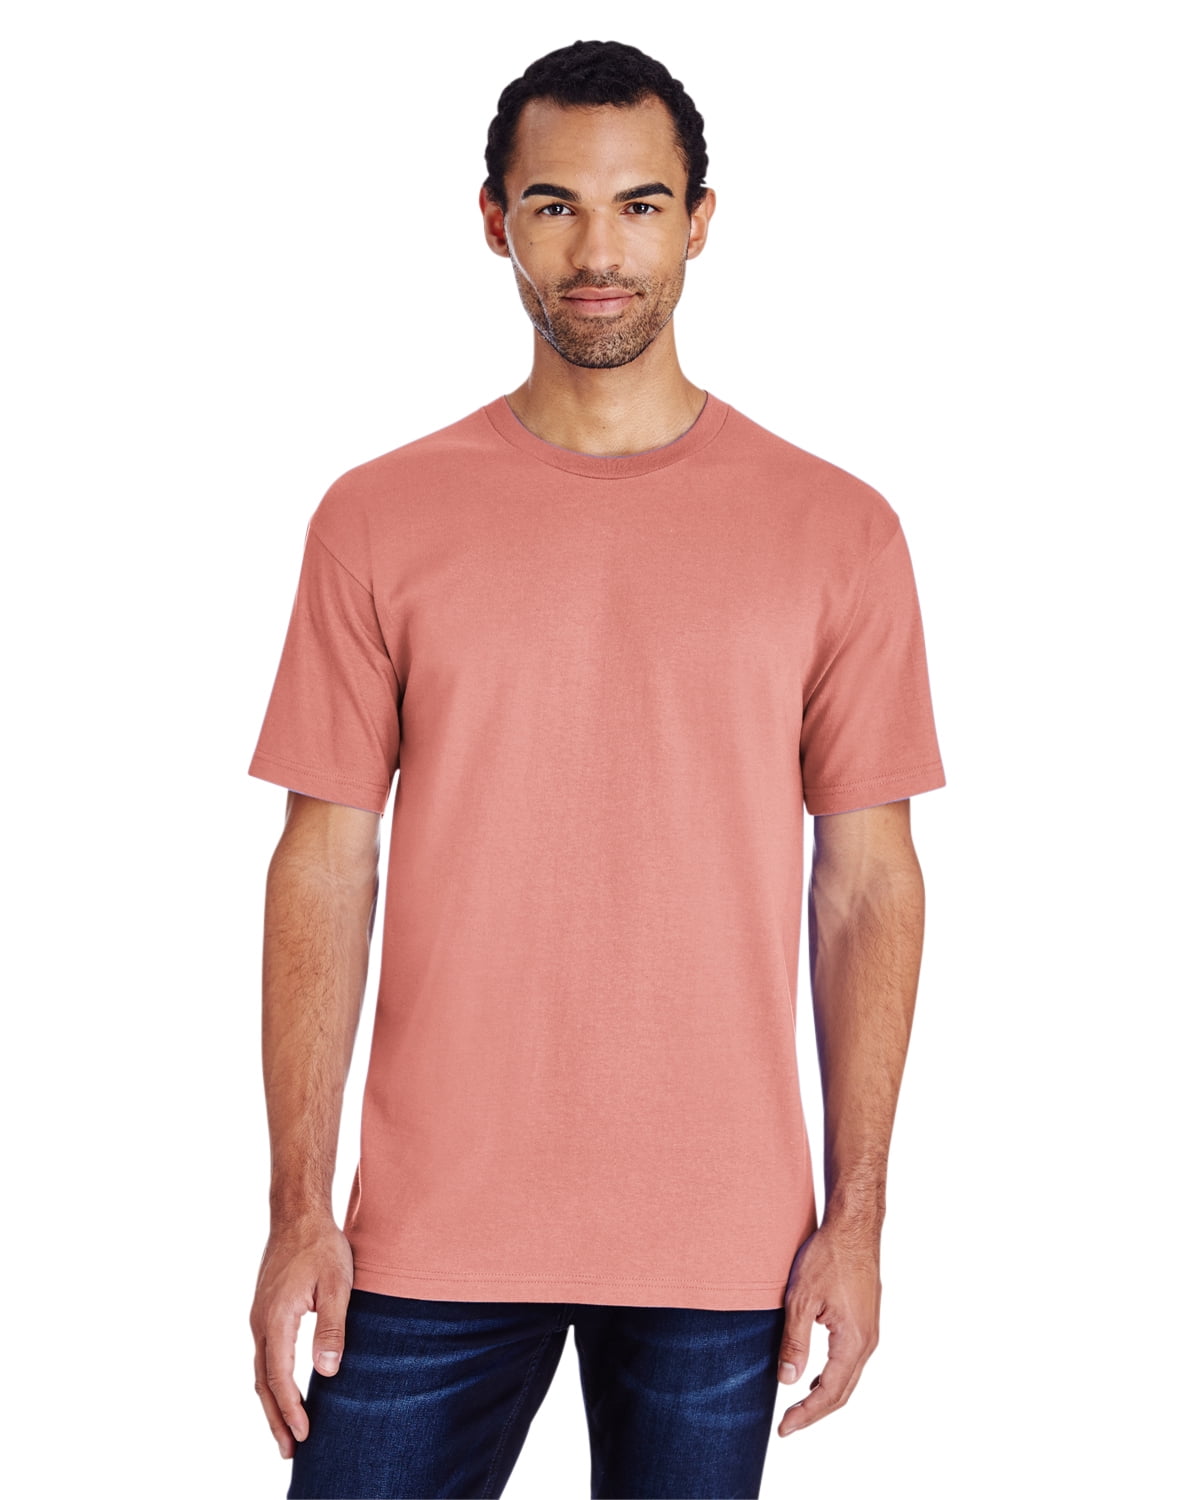 Gildan Mens Hammer Plain Crew Neck T-Shirts Tee Tshirt 100% Cotton